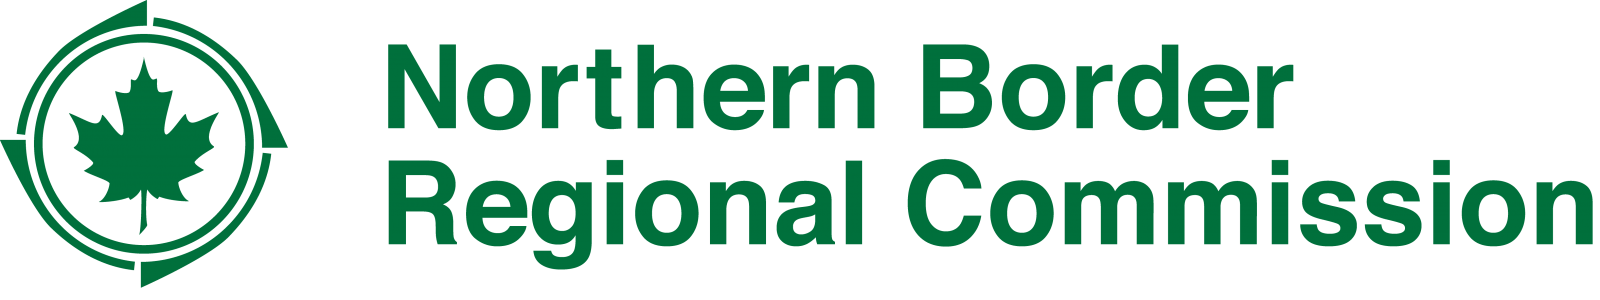 NBRC Primary Logo Green